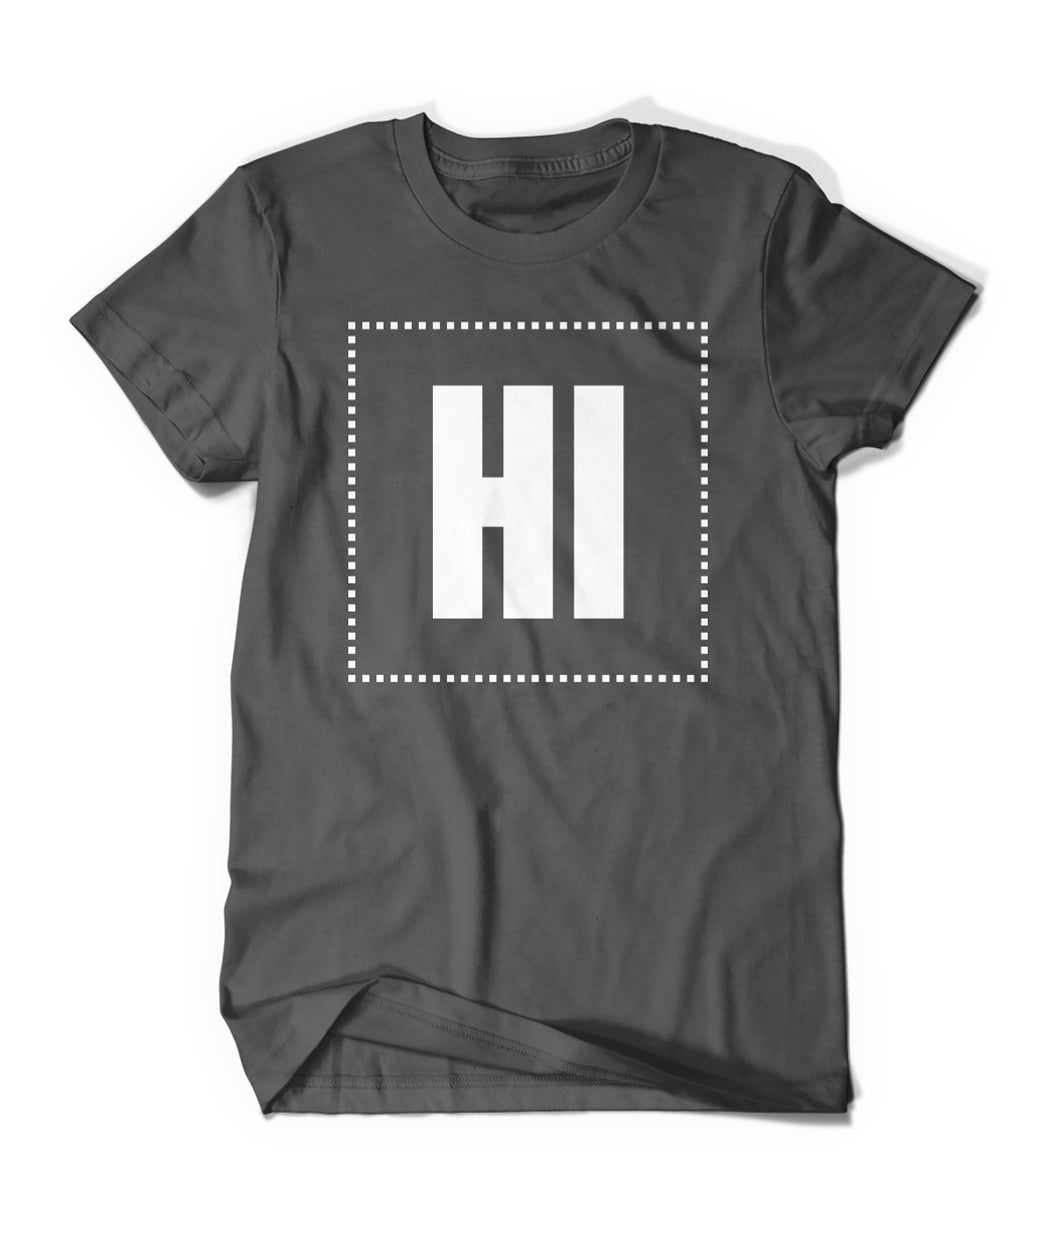 Logo Shirt - Hello Internet  - DFTBA